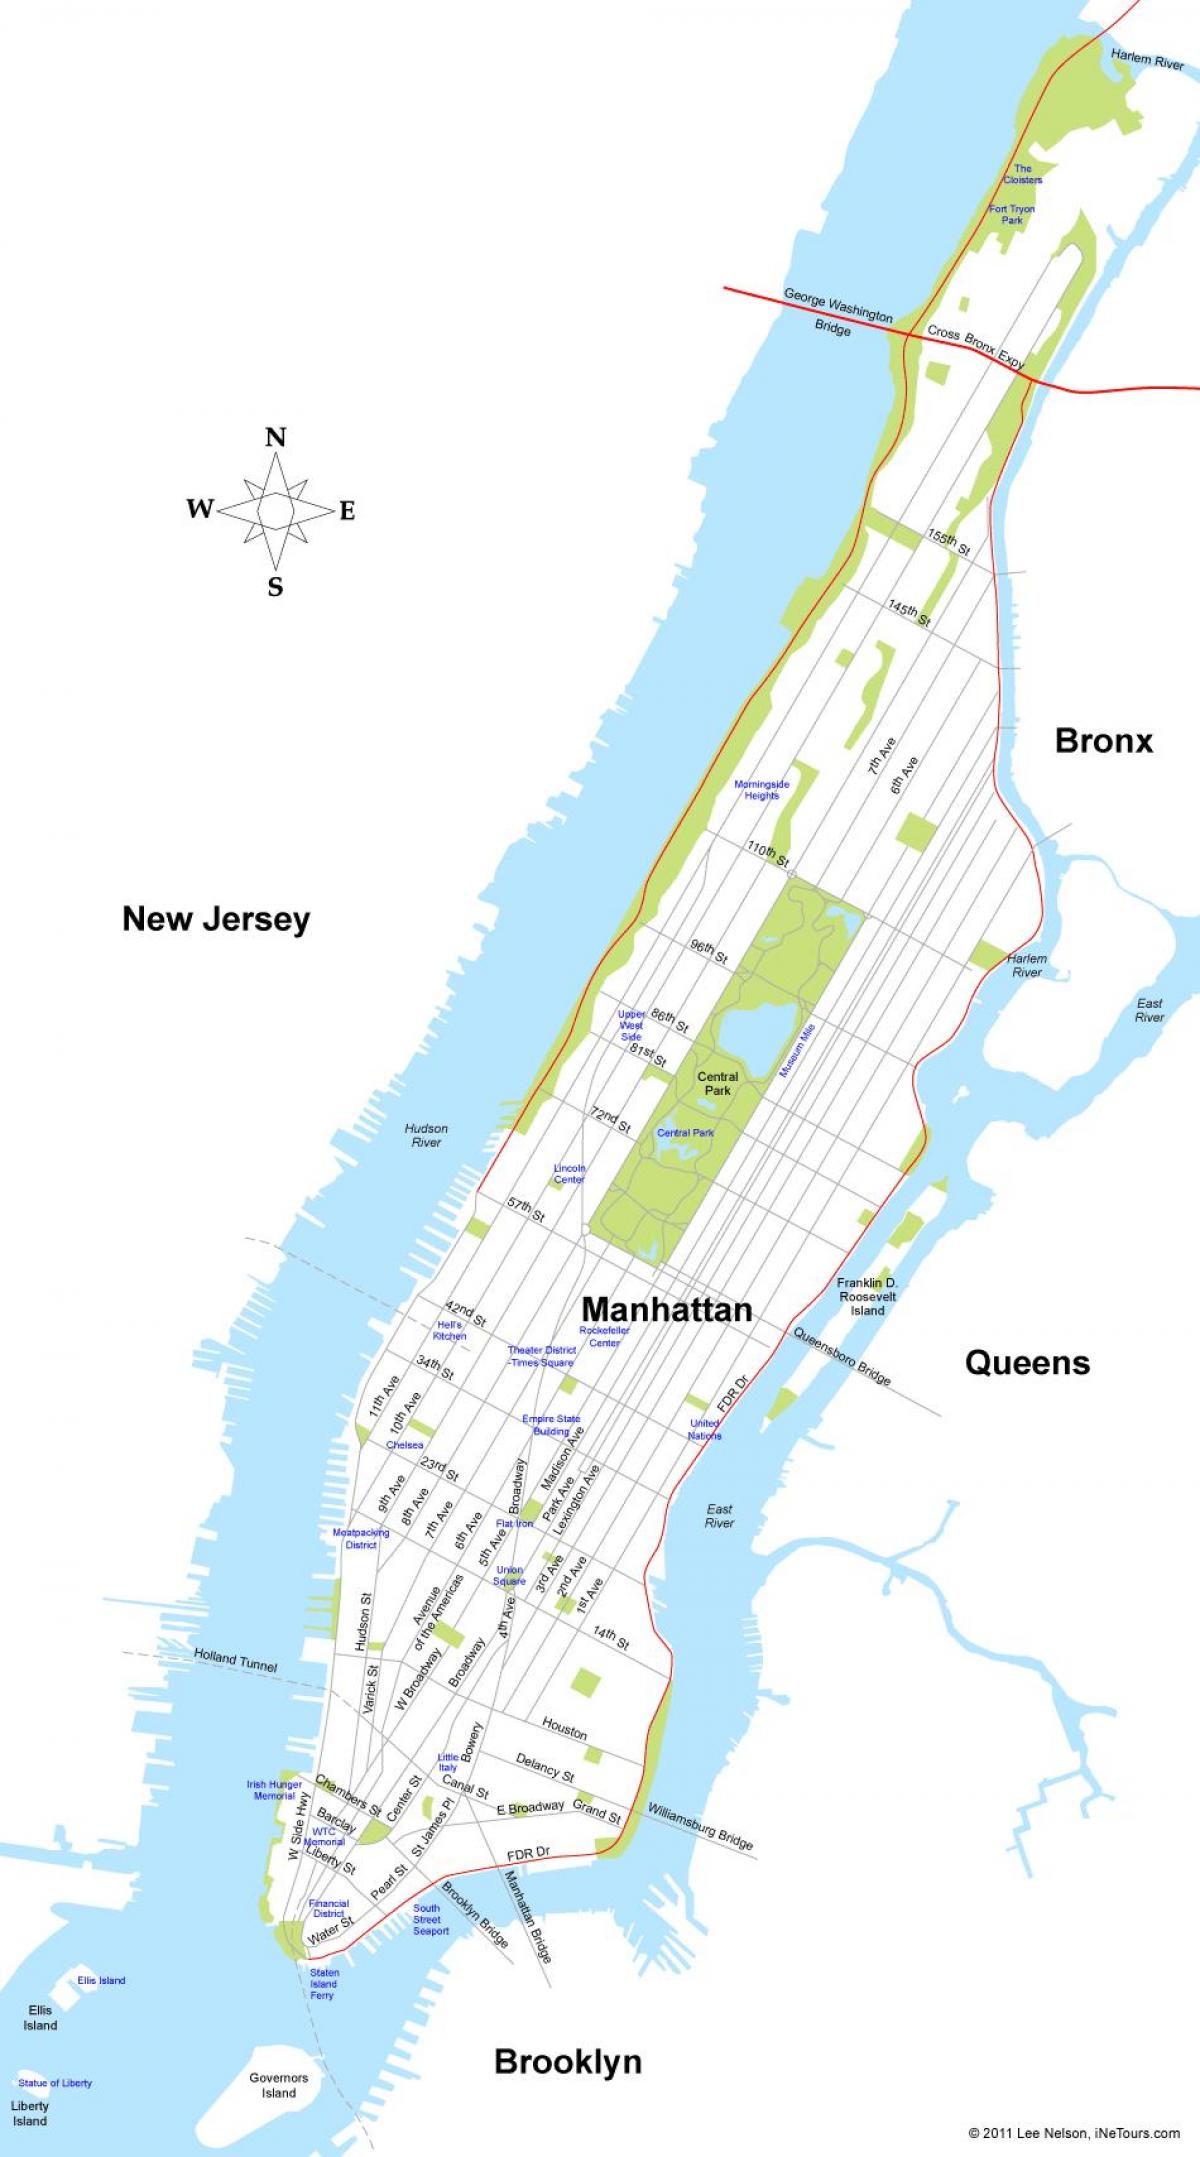 bản đồ của đảo Manhattan, New York